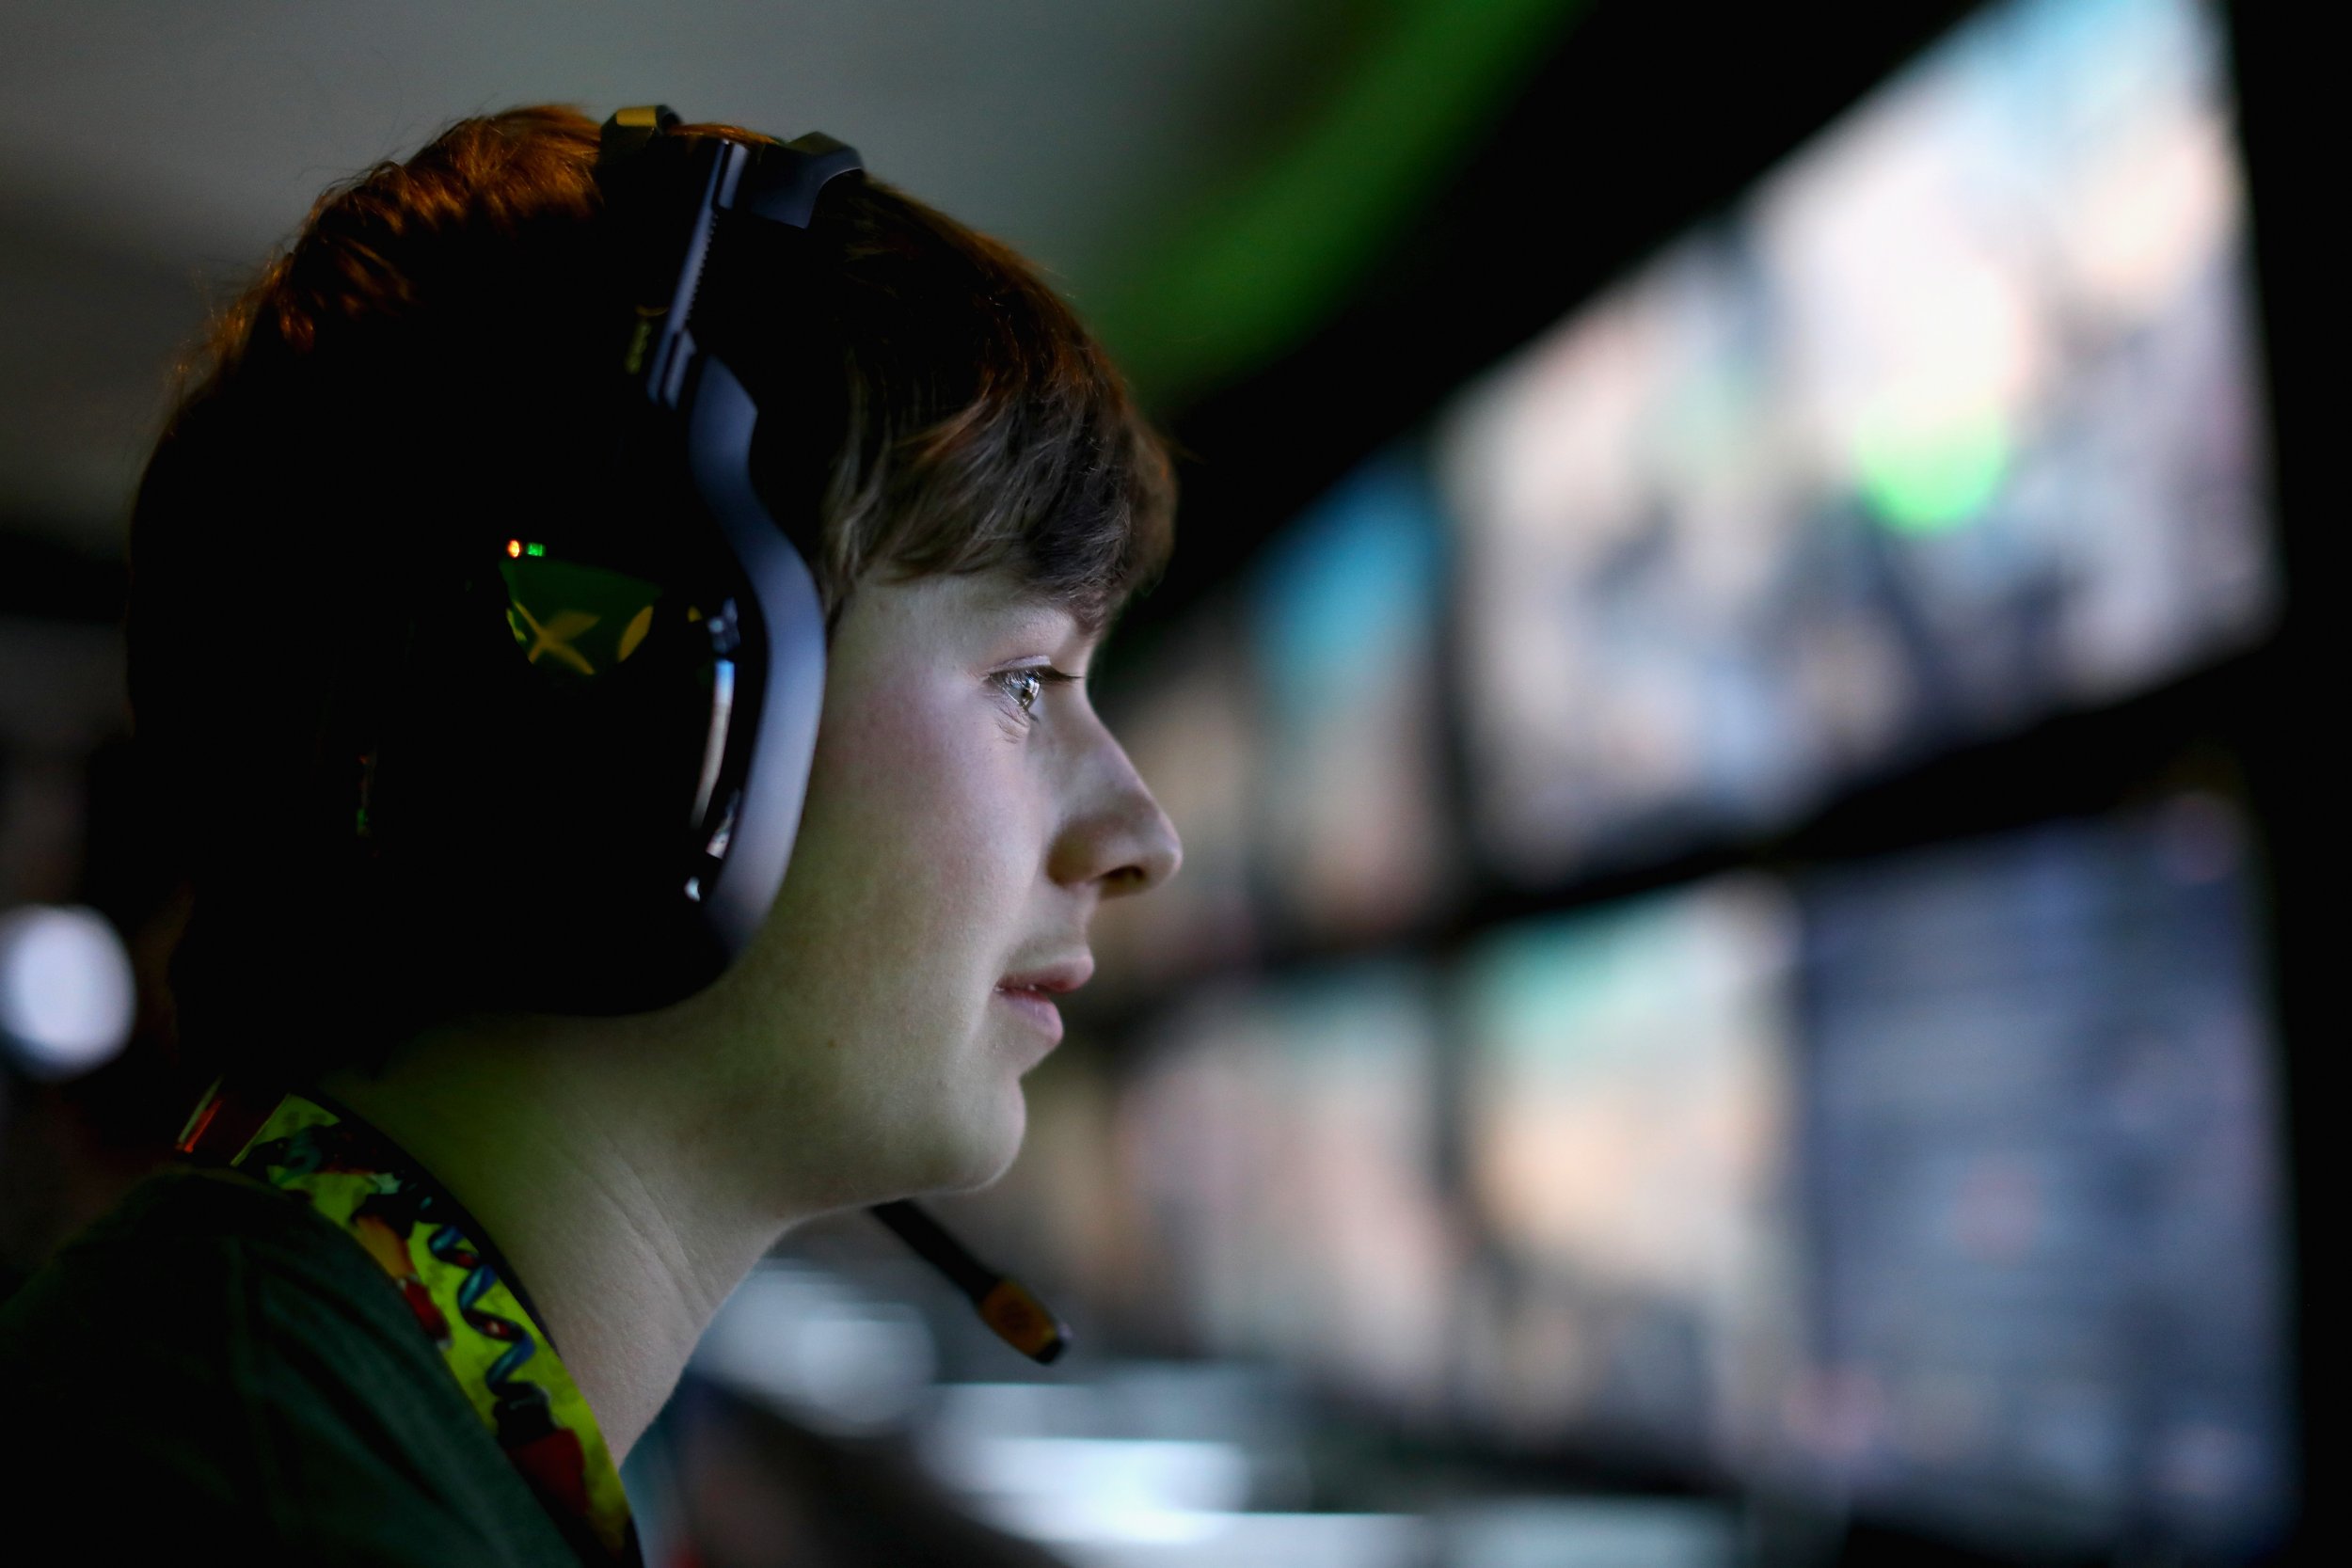 Gaming may help improve school results among teens: Study